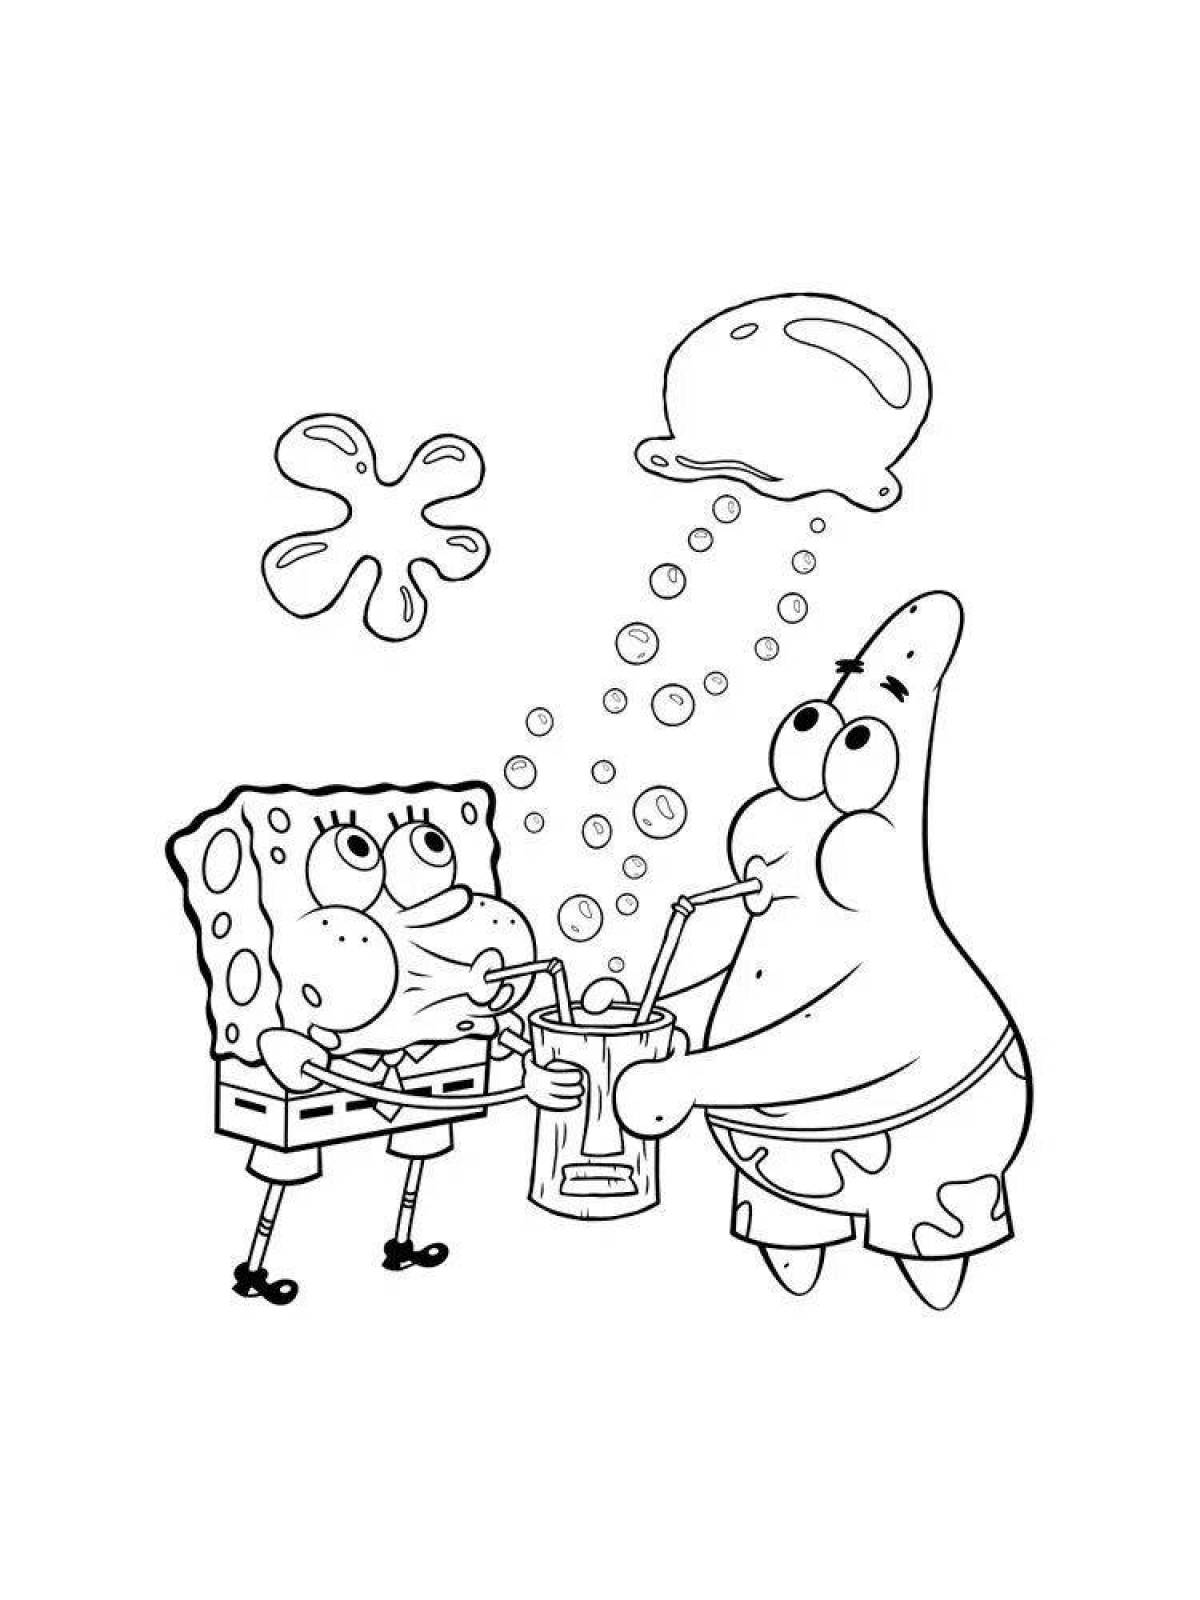 Spongebob and friends #15